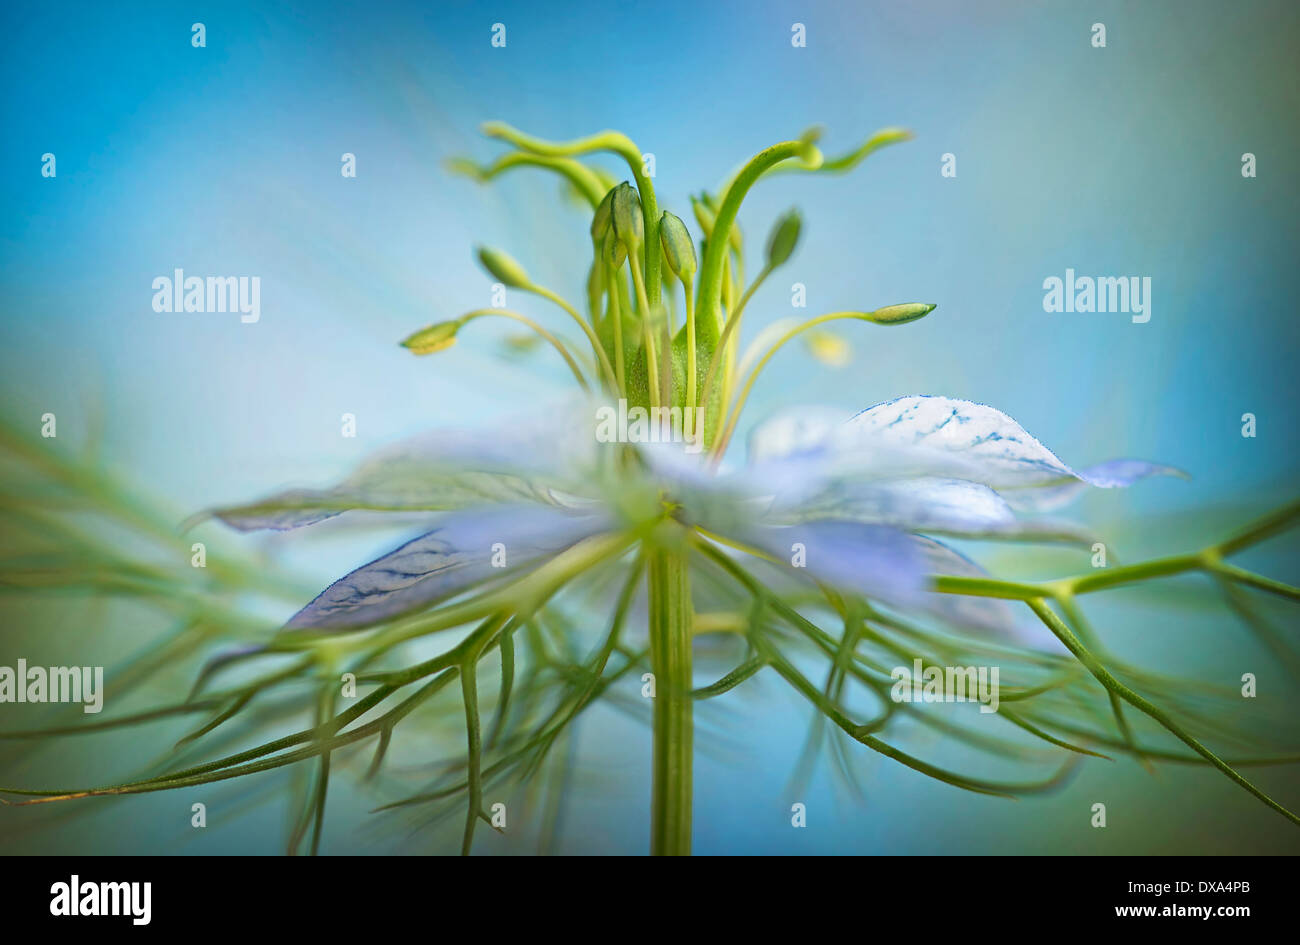 Love-in-a-mist, Nigella damascena, close up showing stamens against a blue background. Stock Photo